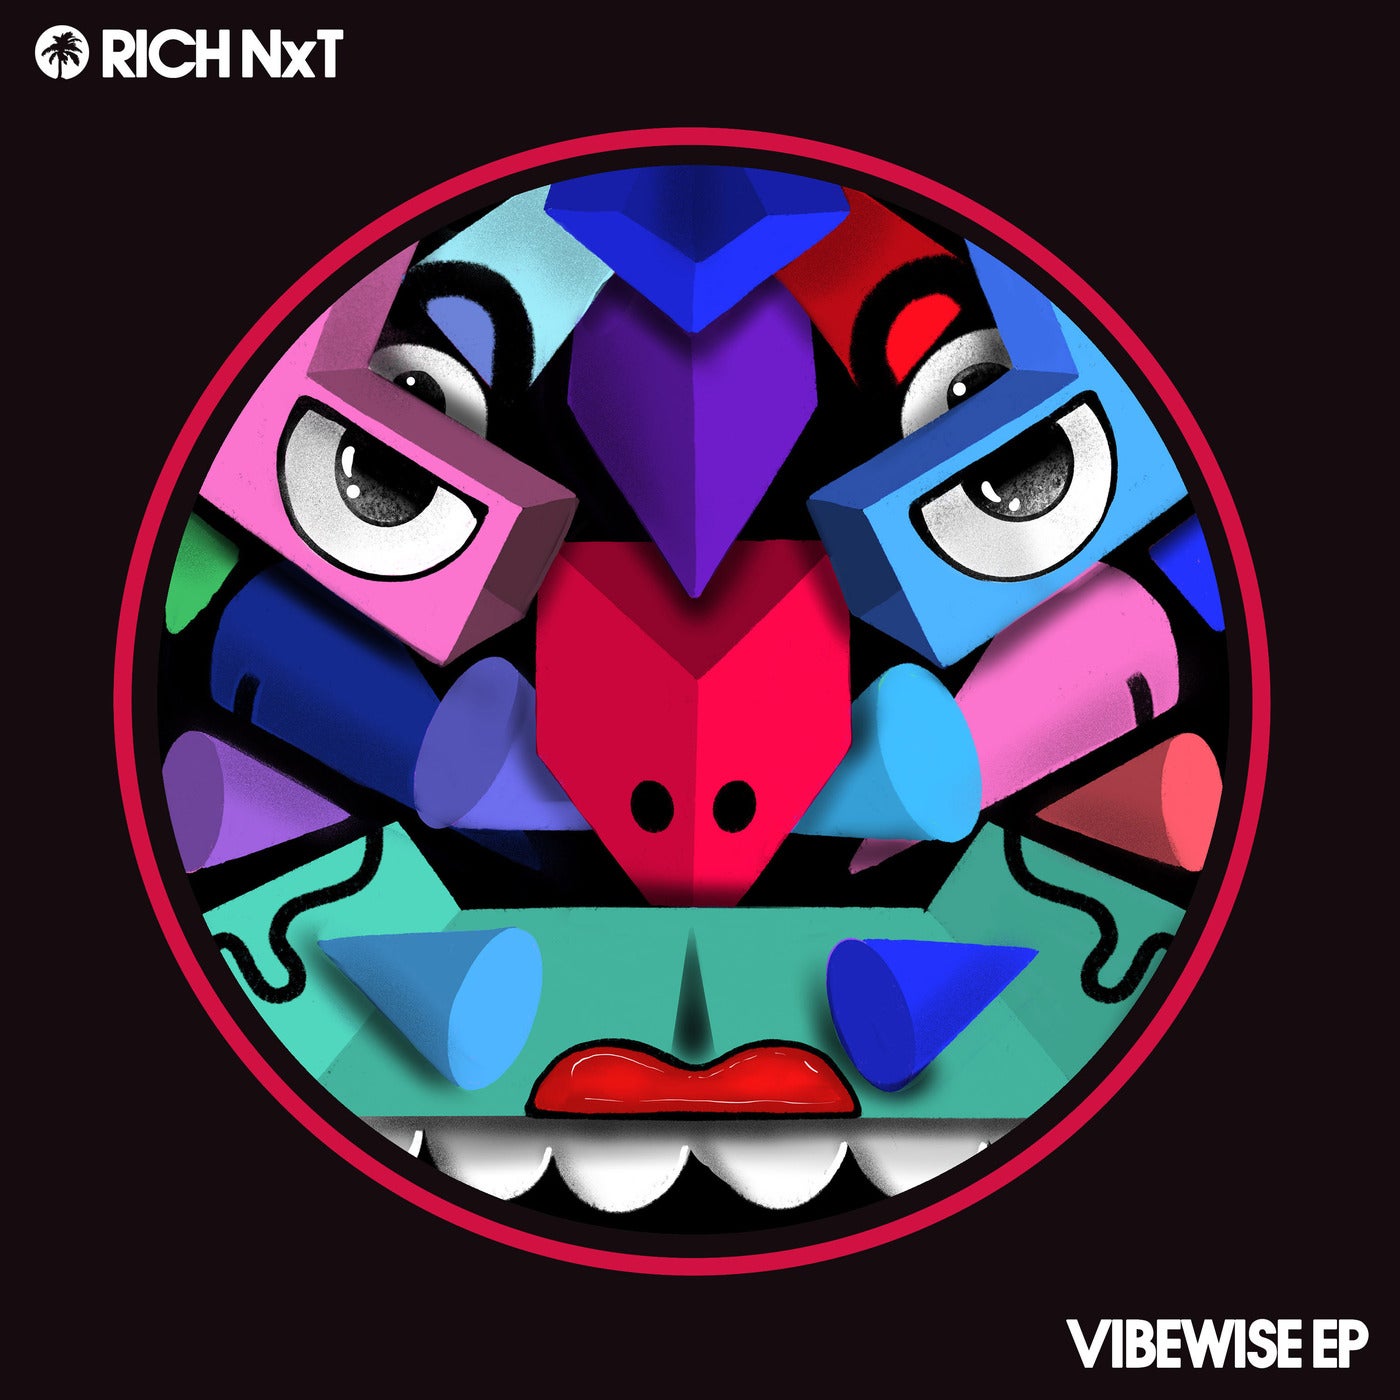 Rich NxT - Vibewise EP [HOTC180]